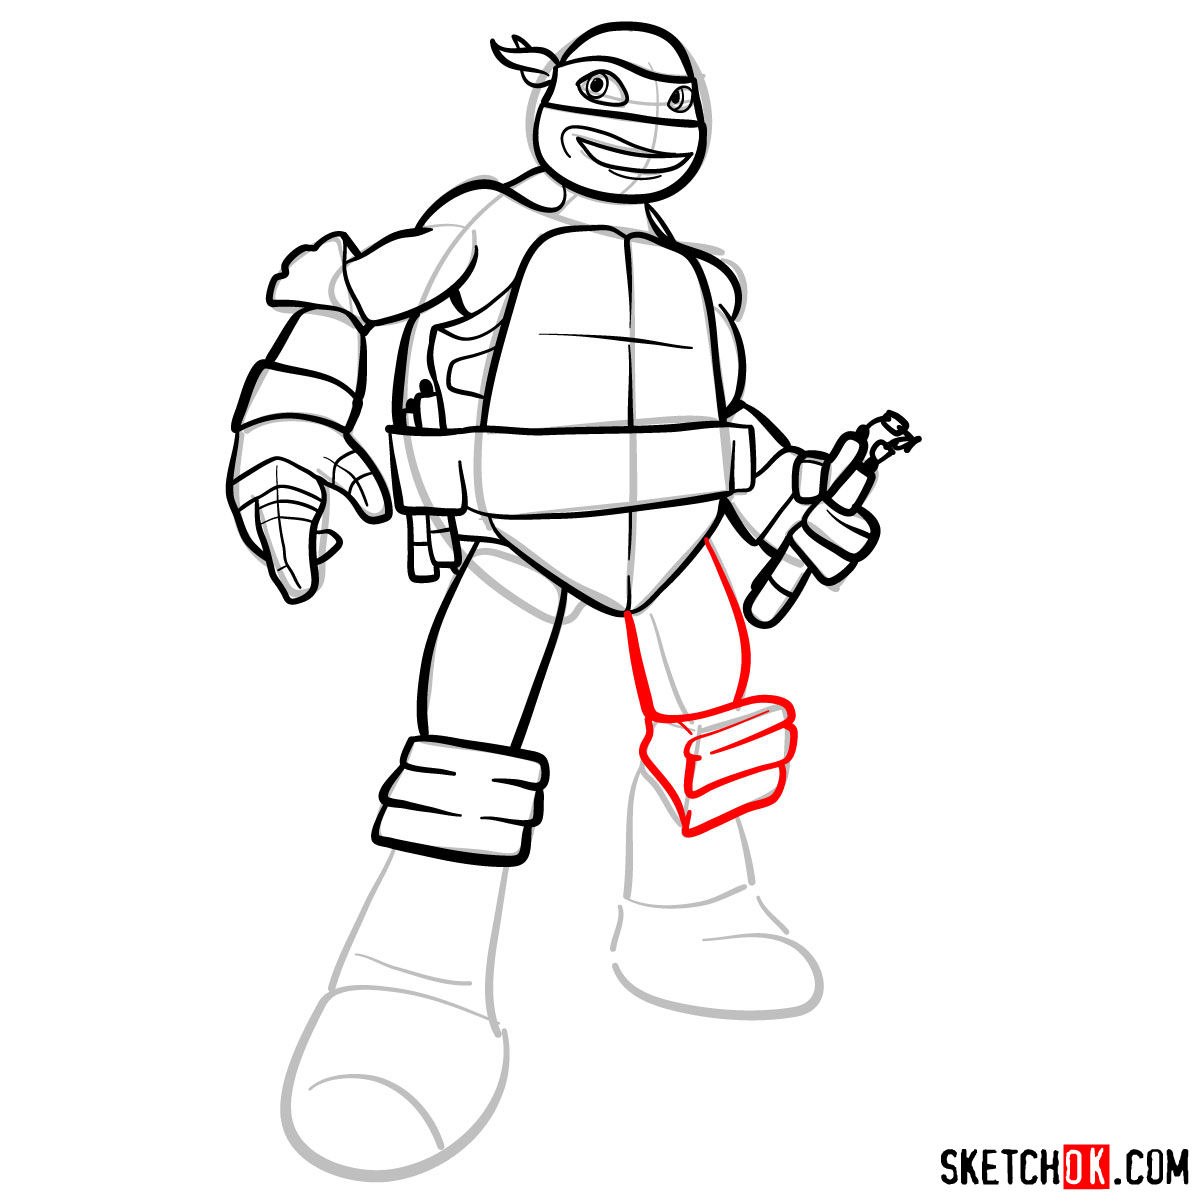 How to draw Michaelangelo ninja turtle cartoon style - step 10